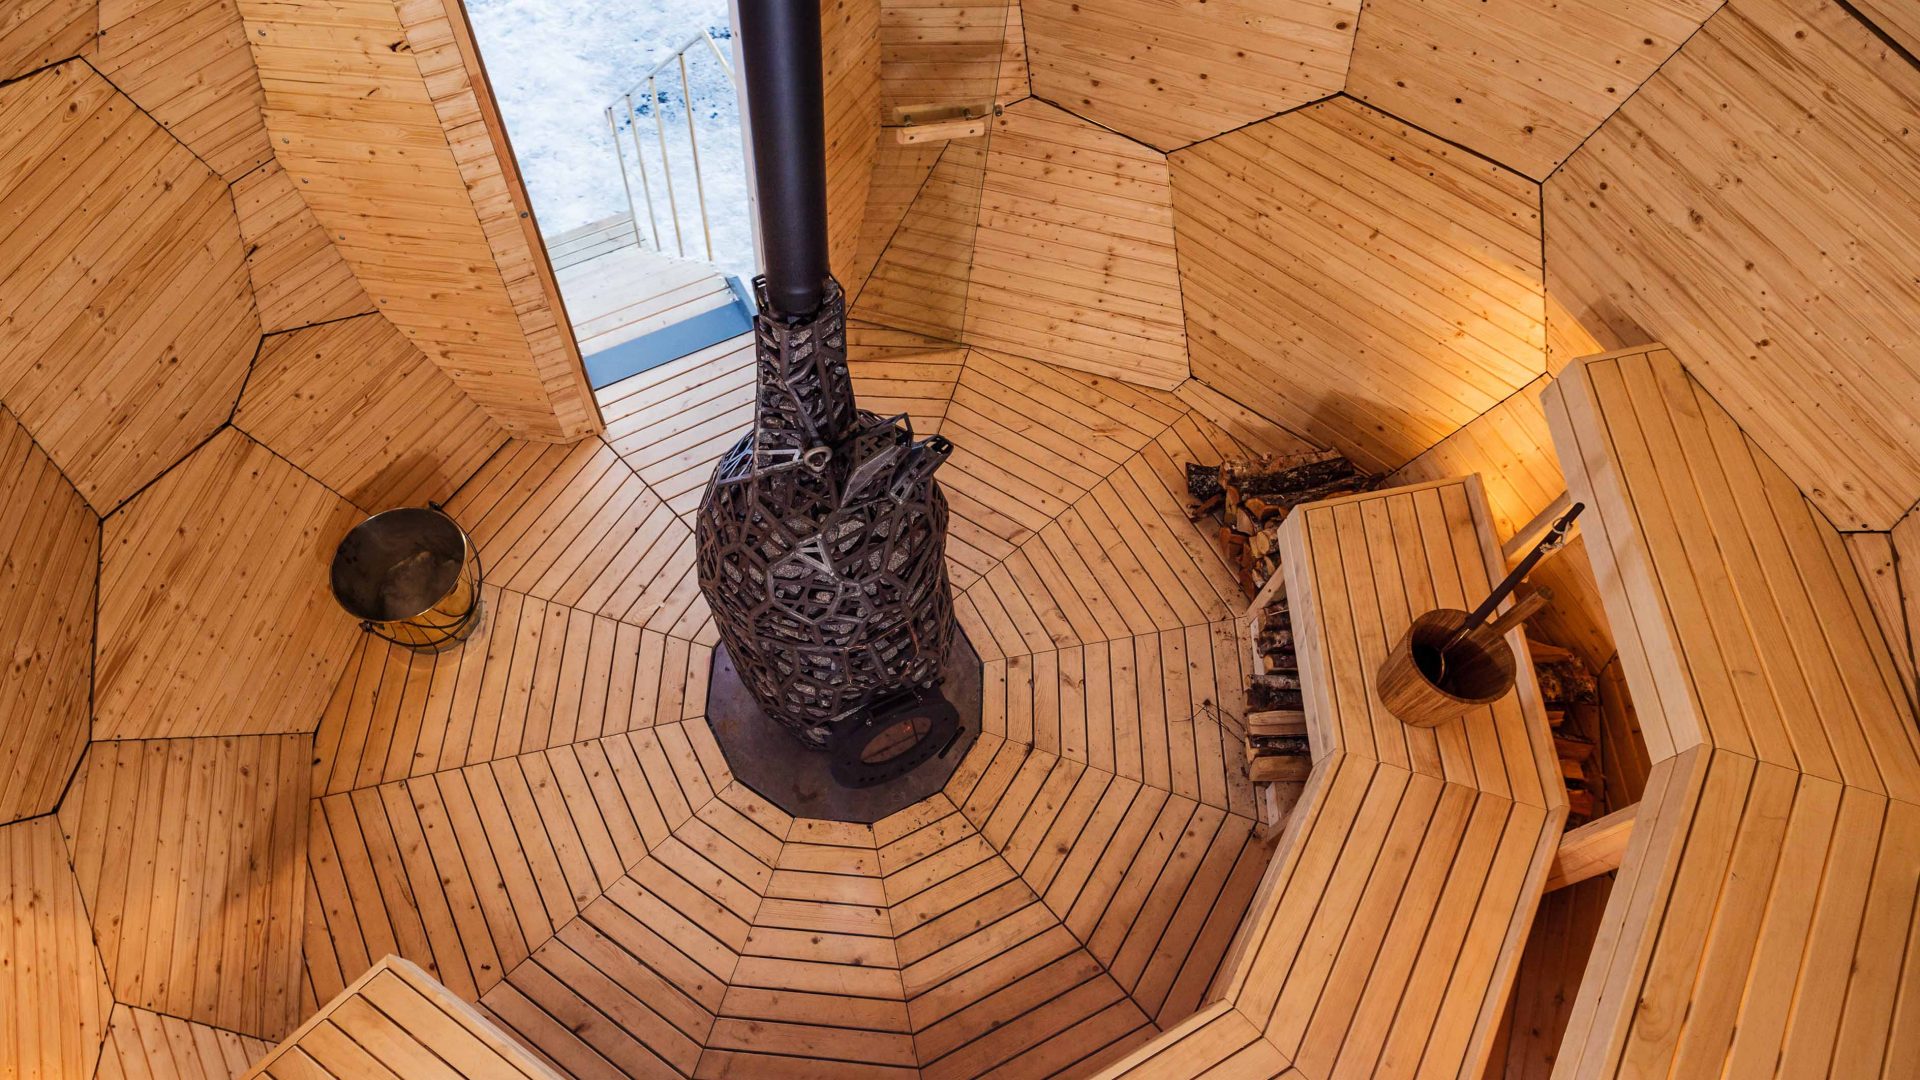 The interior of the solar golden egg sauna.